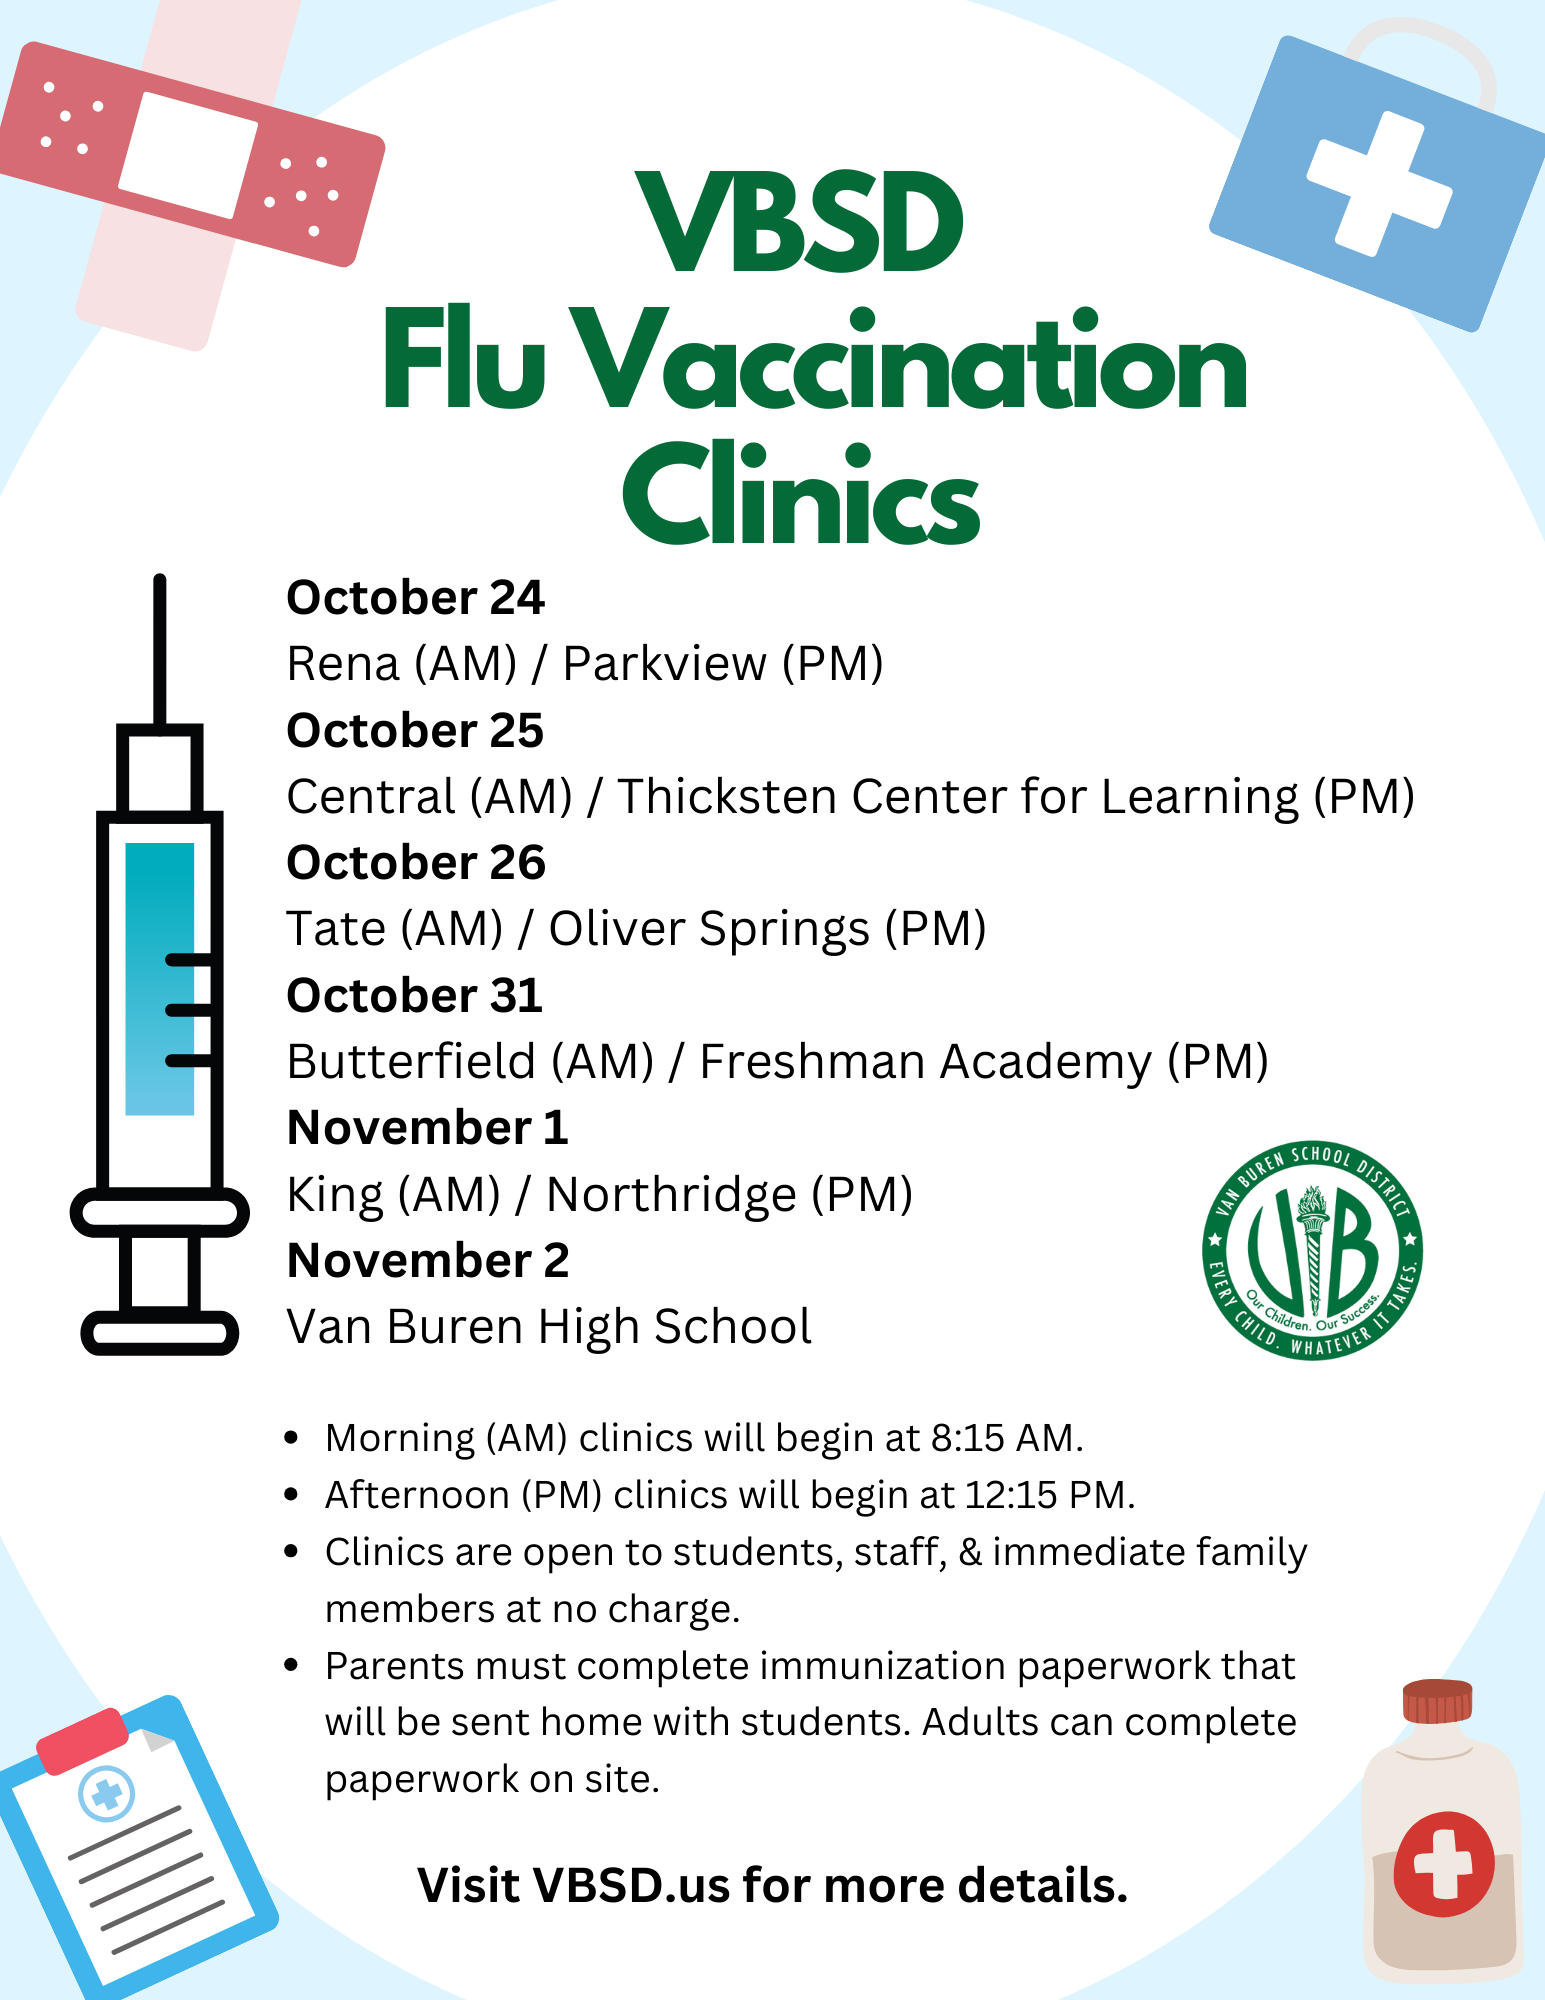 VBSD Flu Vaccination Clinics to be held Oct. 24 - Nov. 2